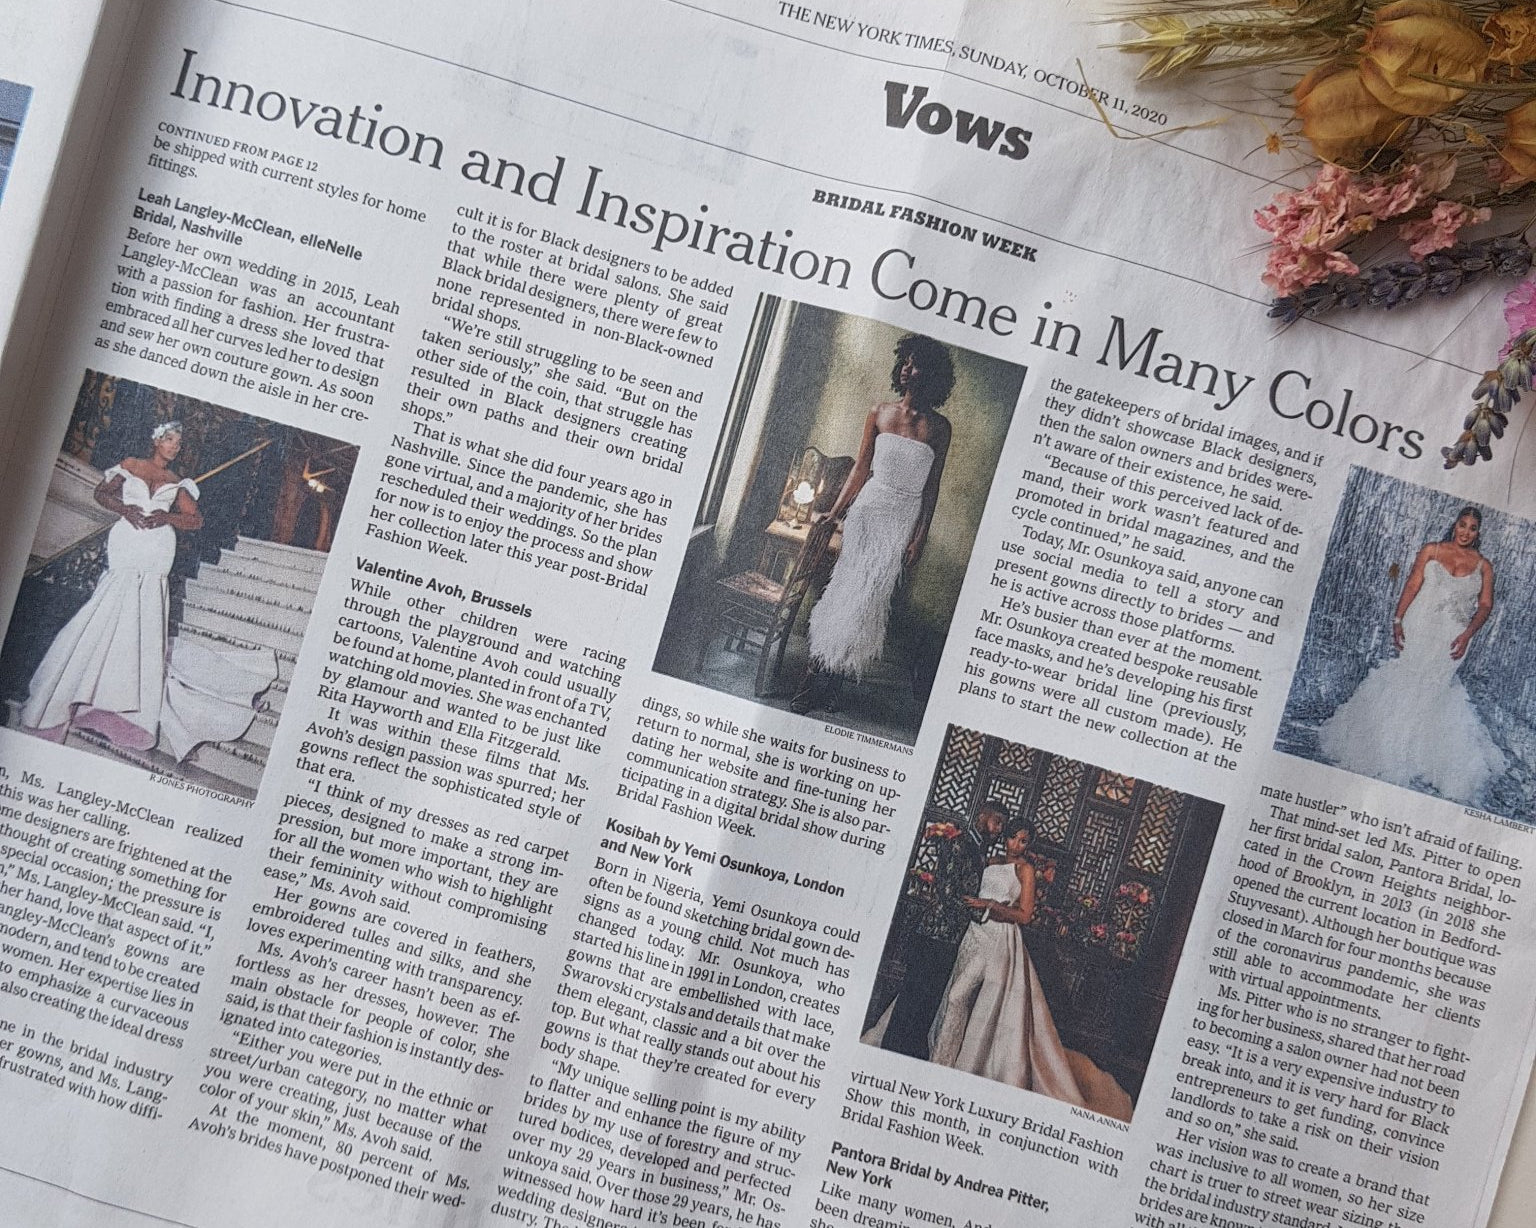 New York Times - Atelier Valentine Avoh